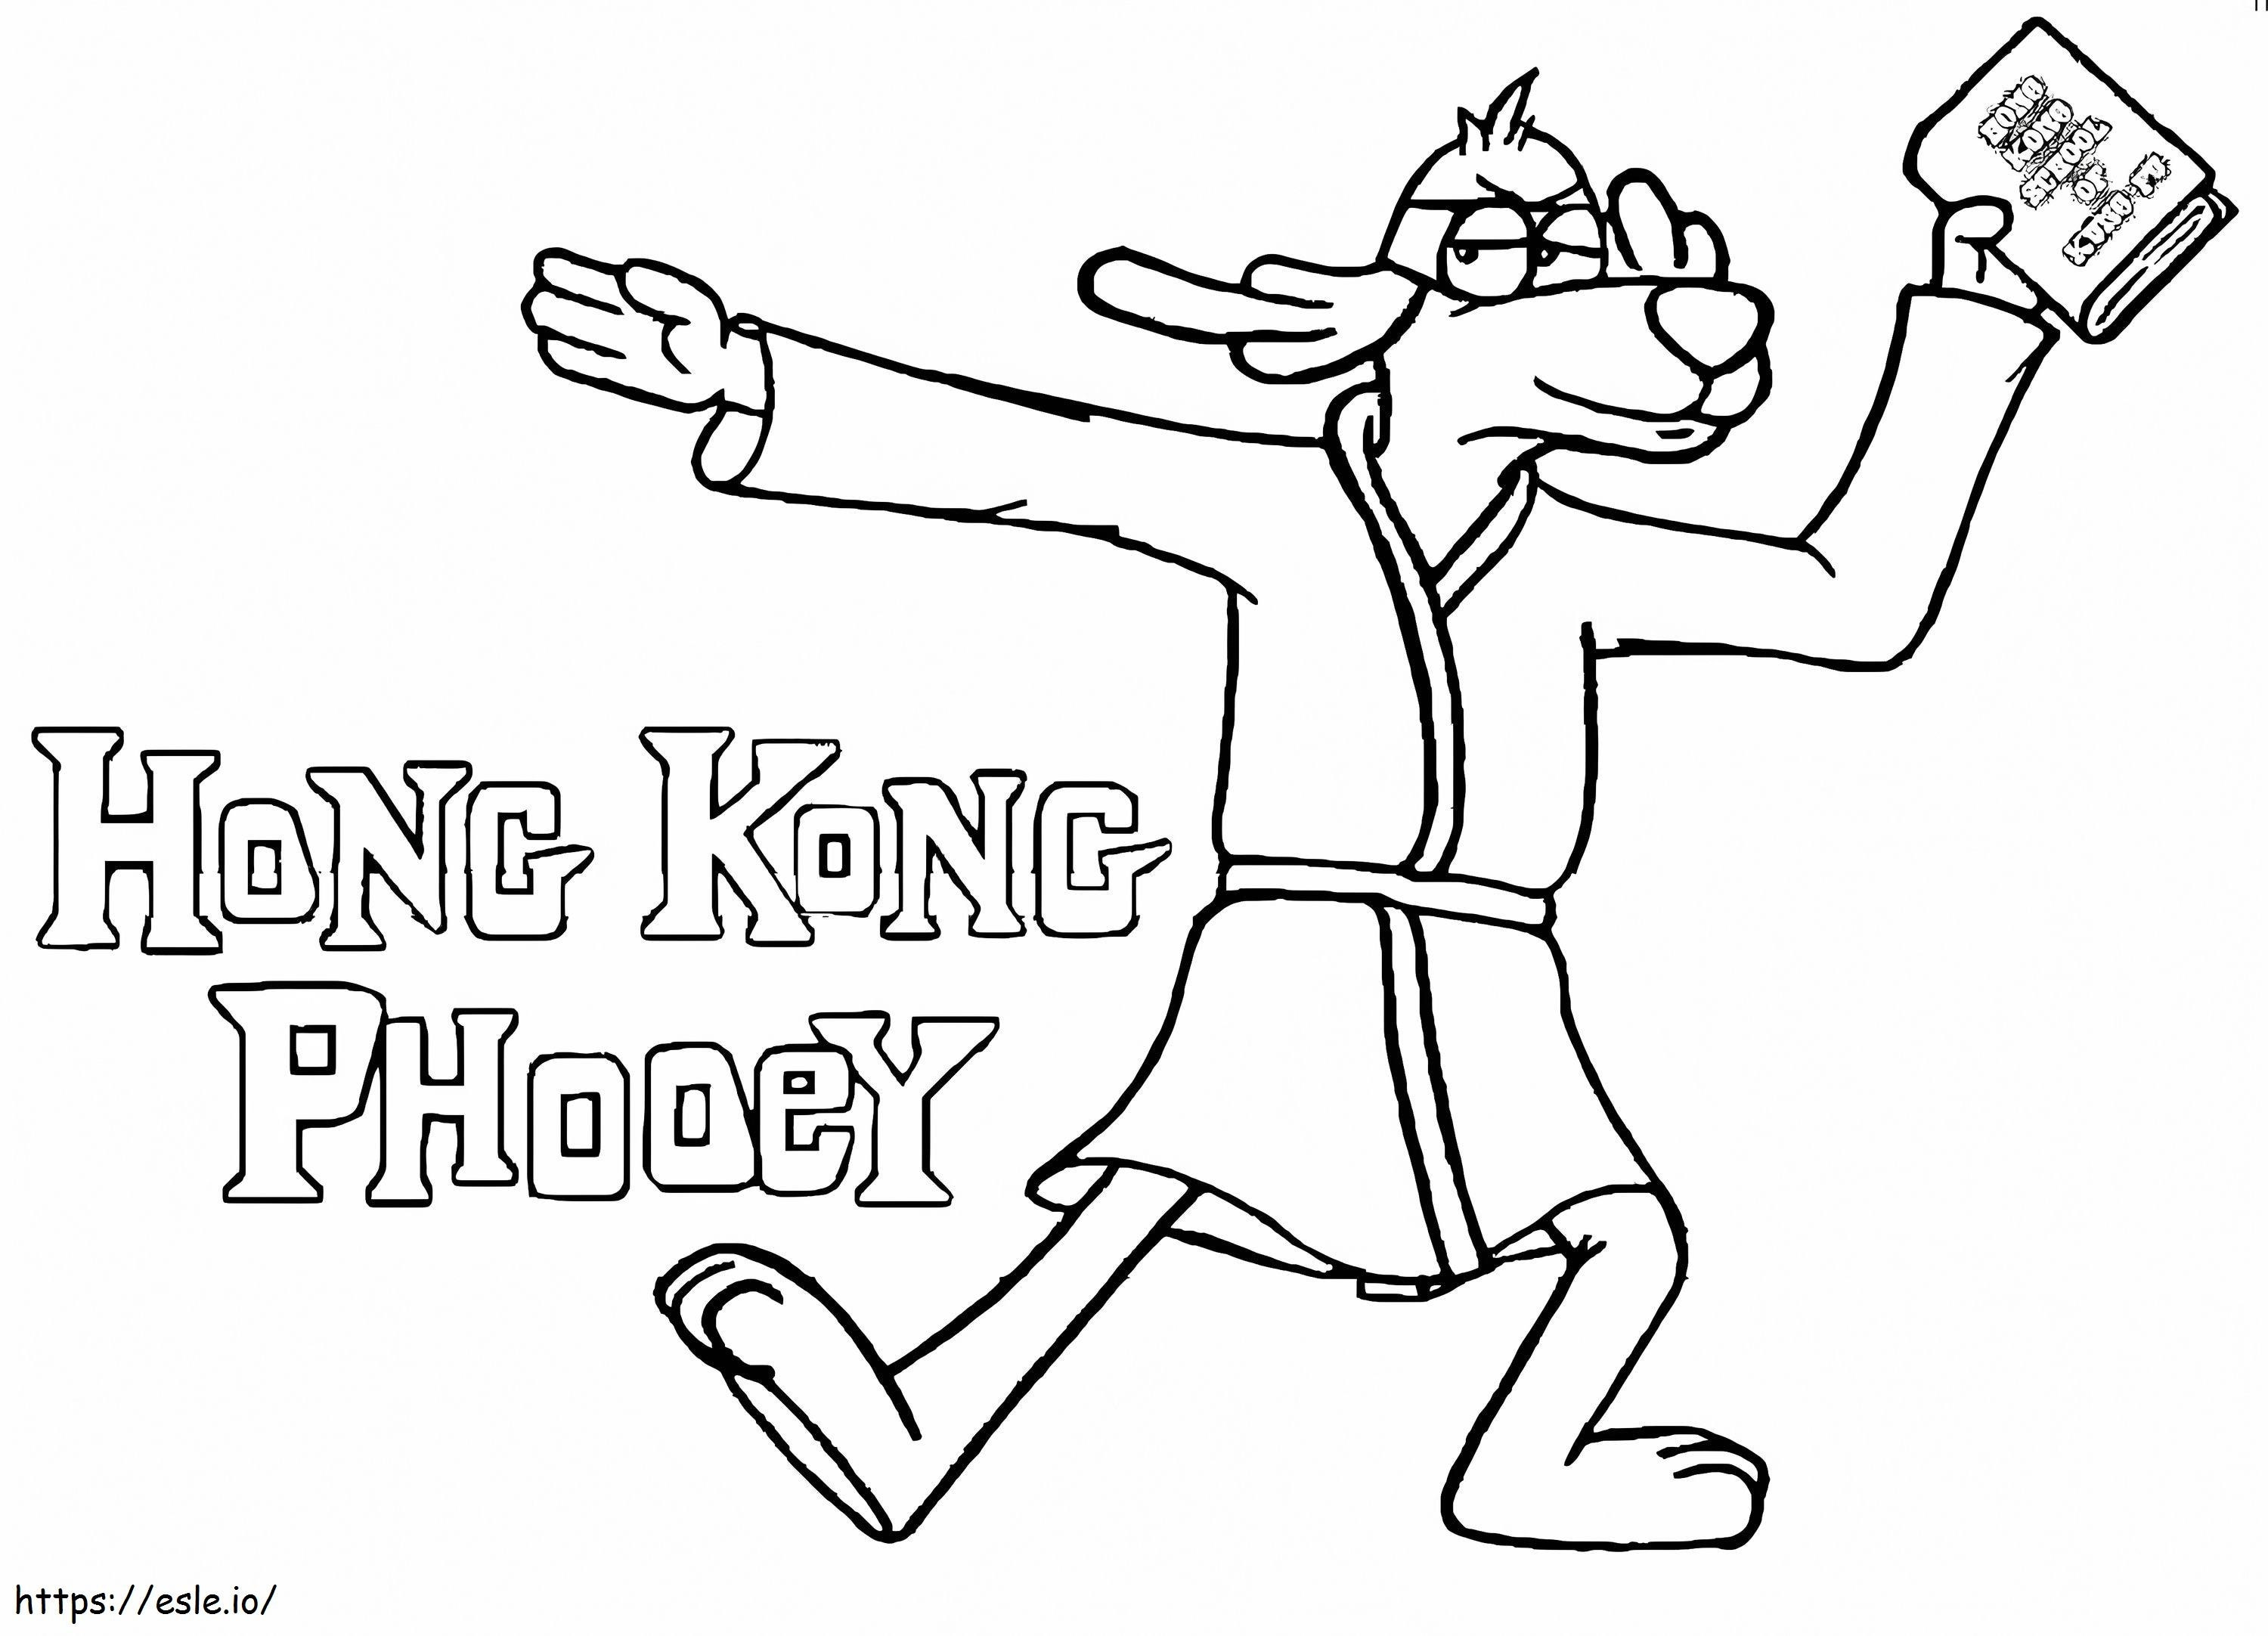 Hong Kong Phooey Bir Kitapla boyama